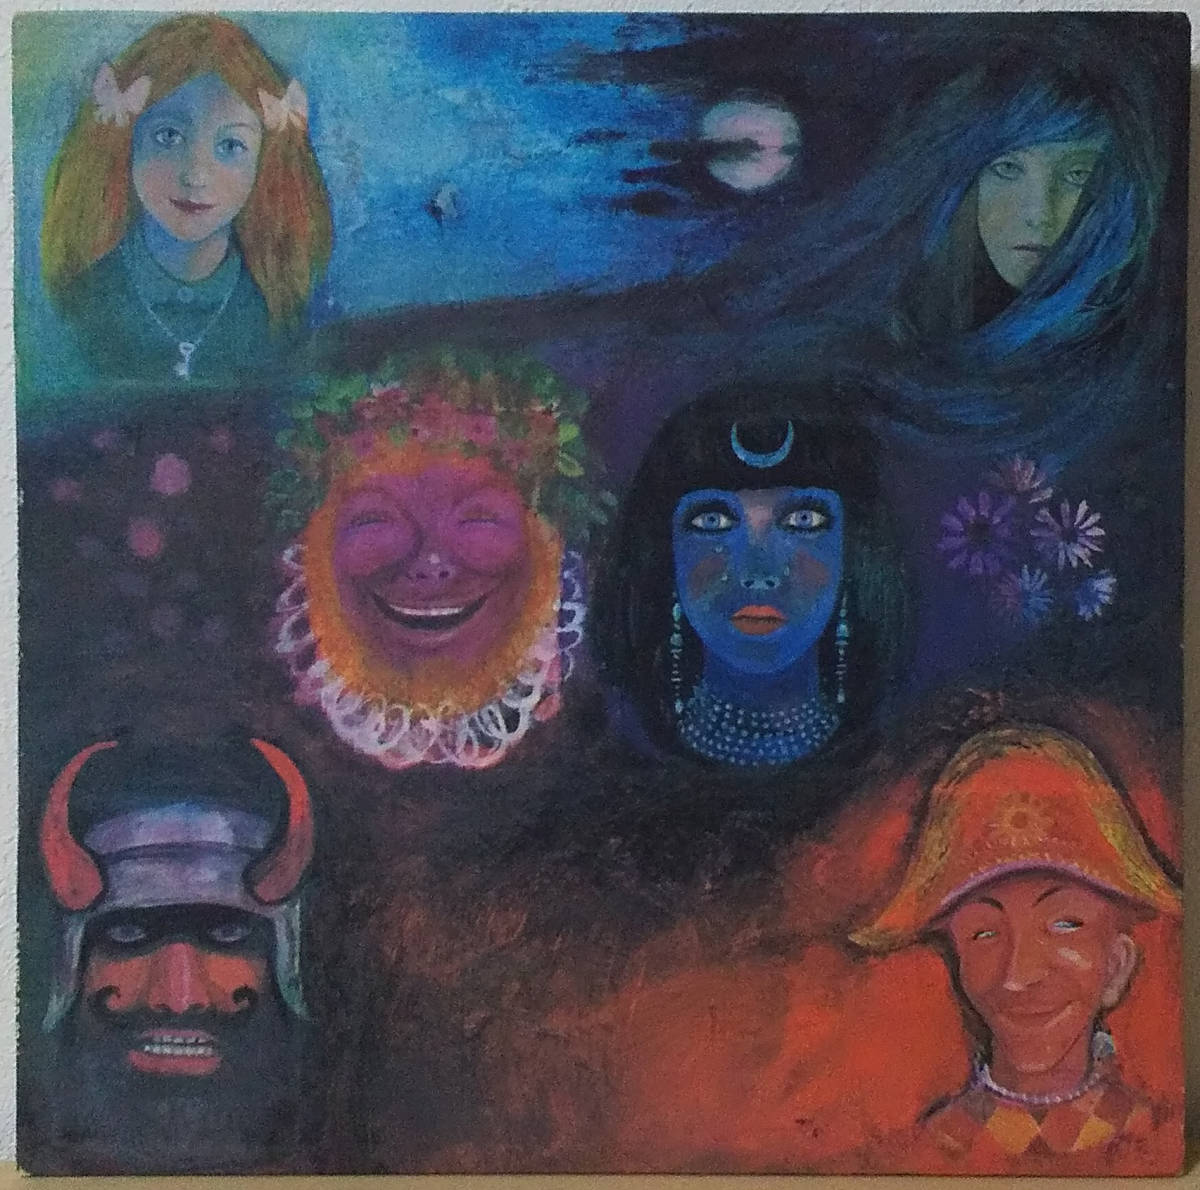 King Crimson - In The Wake Of Poseidon(Monarch Pressing) US запись LP, Gatefold (Textured) Atlantic - SD 8266 King * Crimson 1976 год 